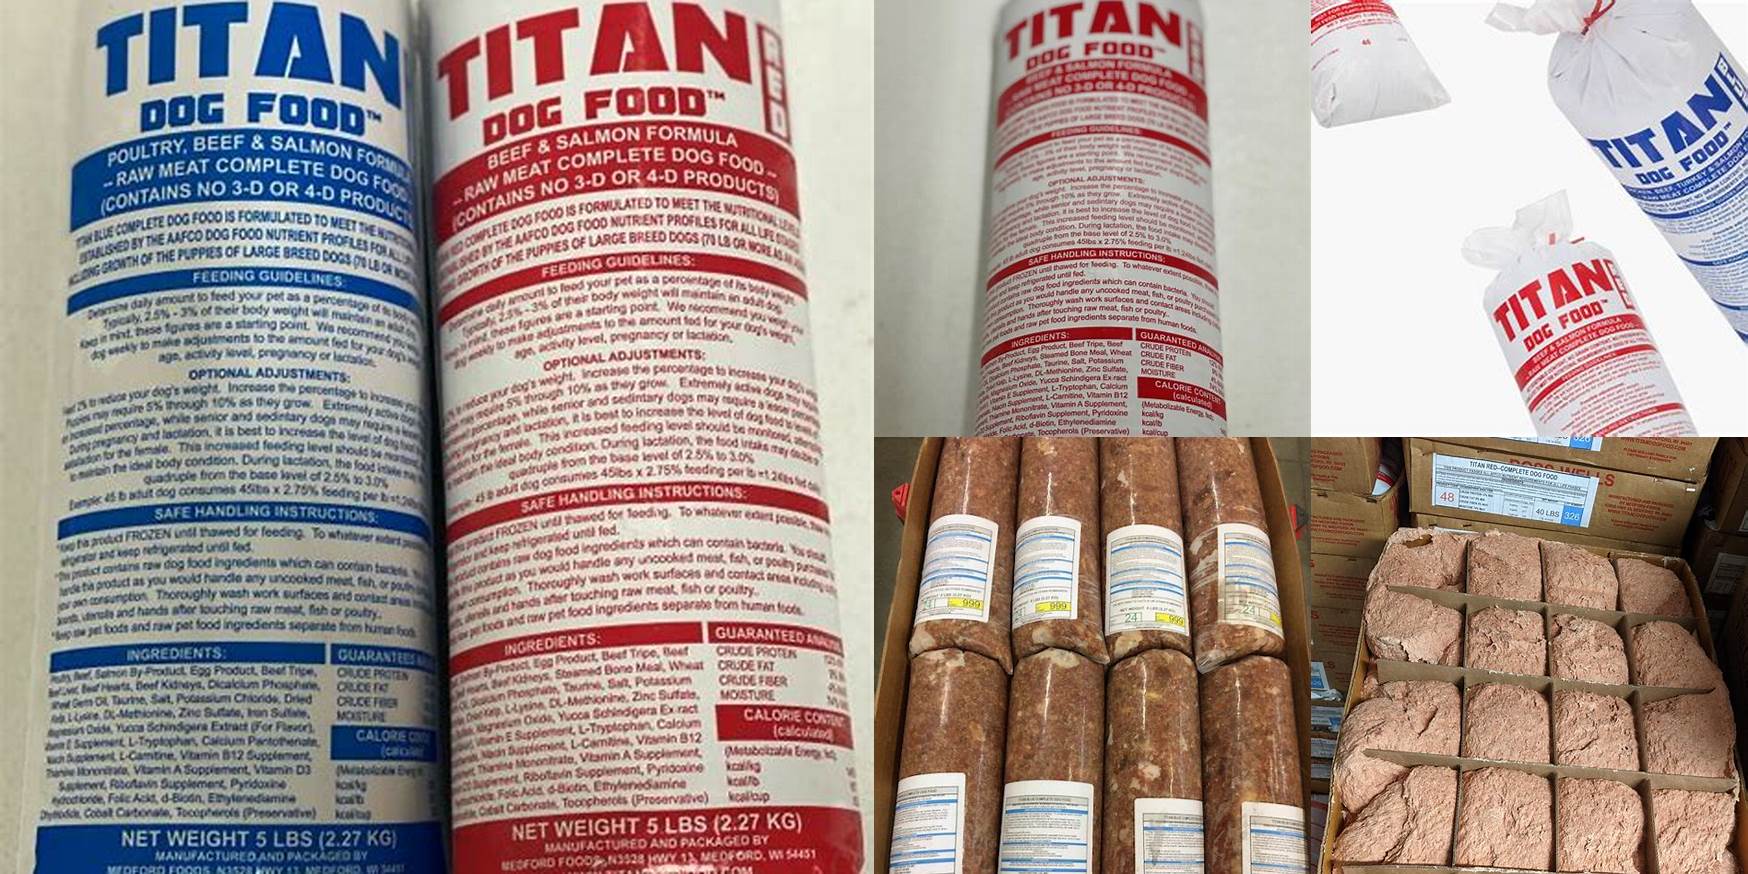 Where To Buy Titan Raw Dog Food